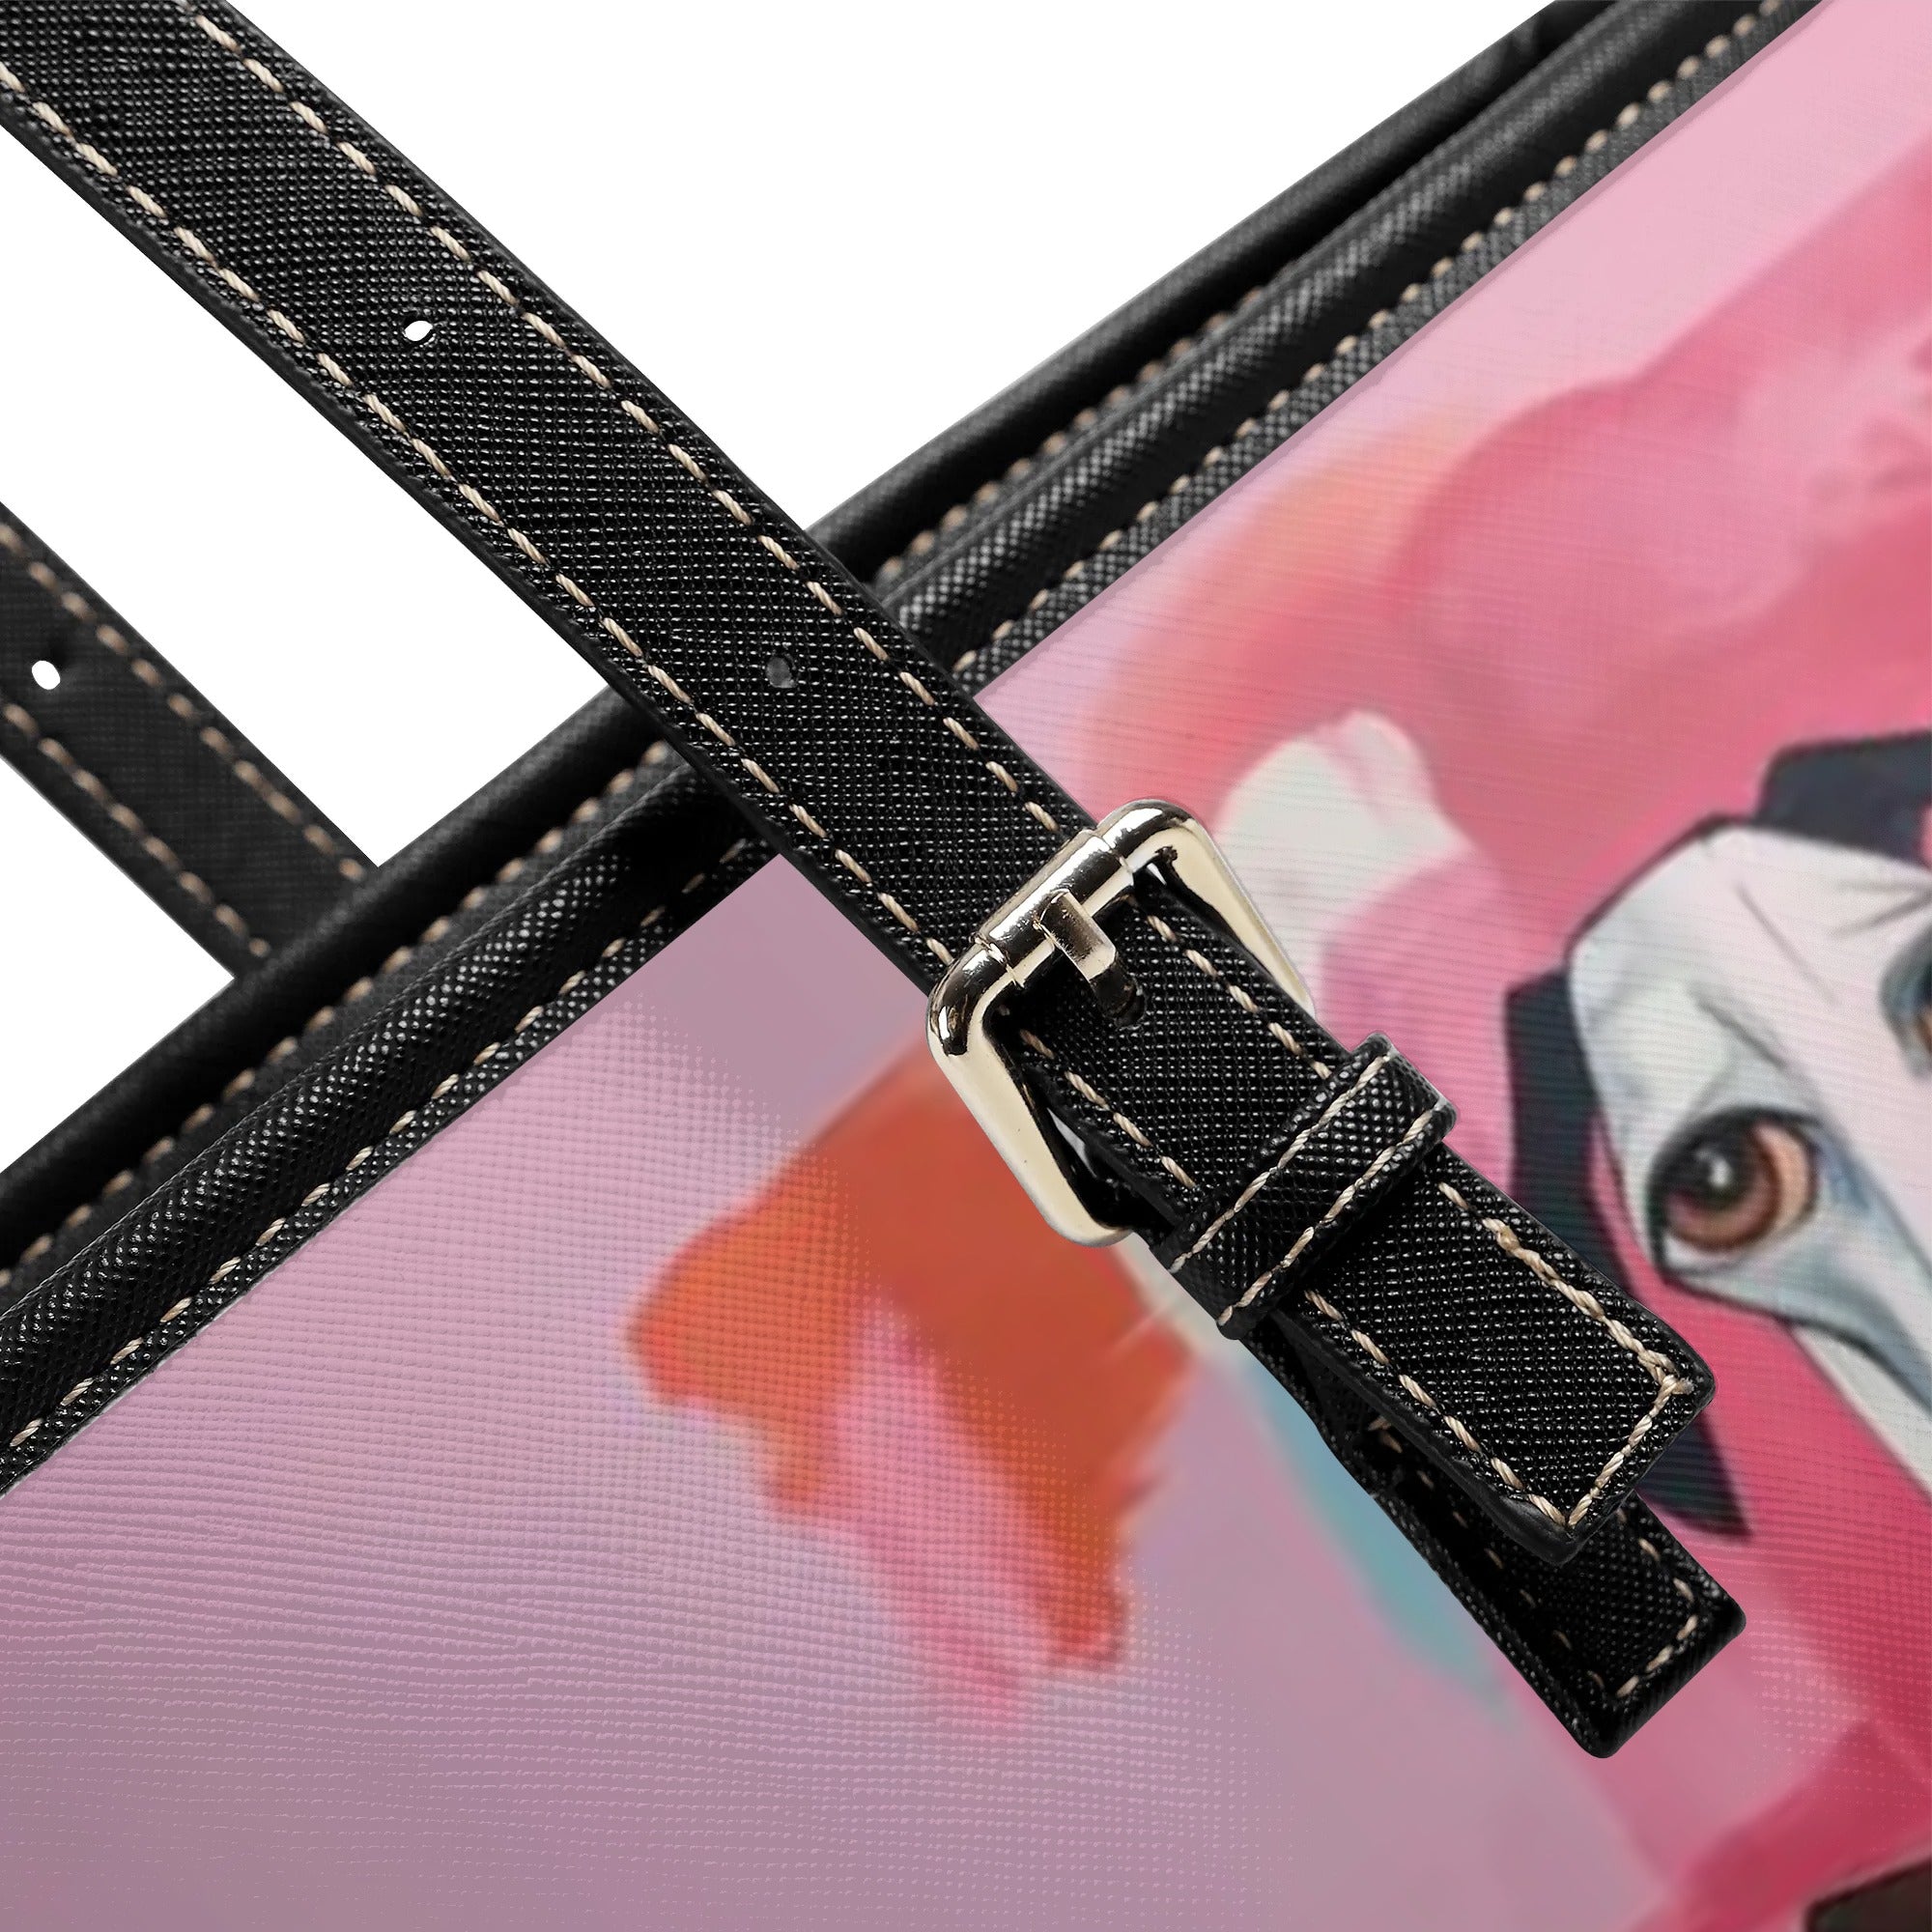 Original Dog Art Pink Durable PU Leather Zipper Handbag - pu-leather-tote-bag-16